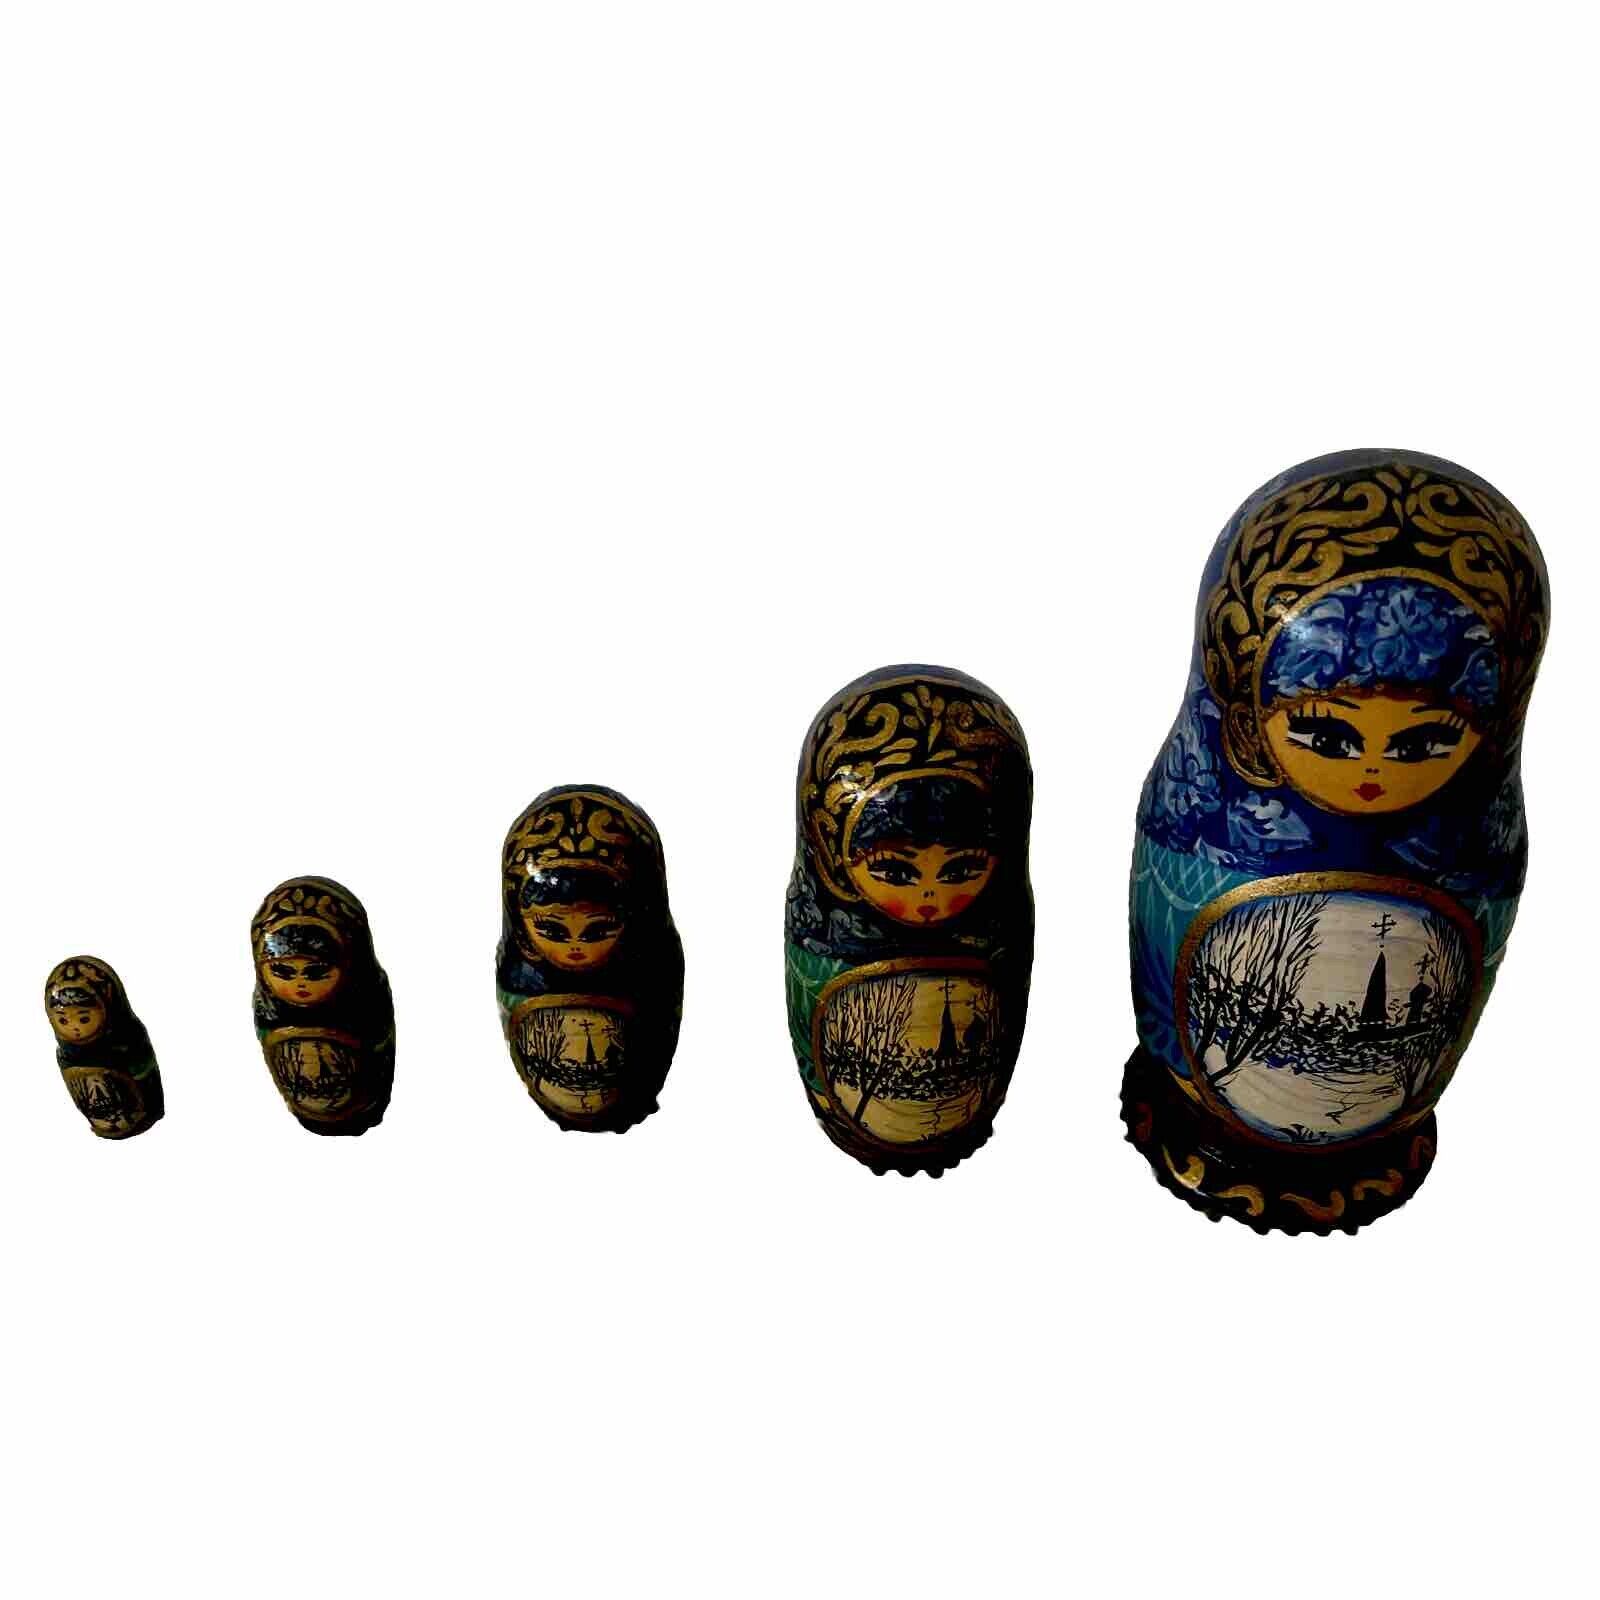 Russian Matryoshka Nesting Dolls Set of 5 Wooden Hand Painted Vintage